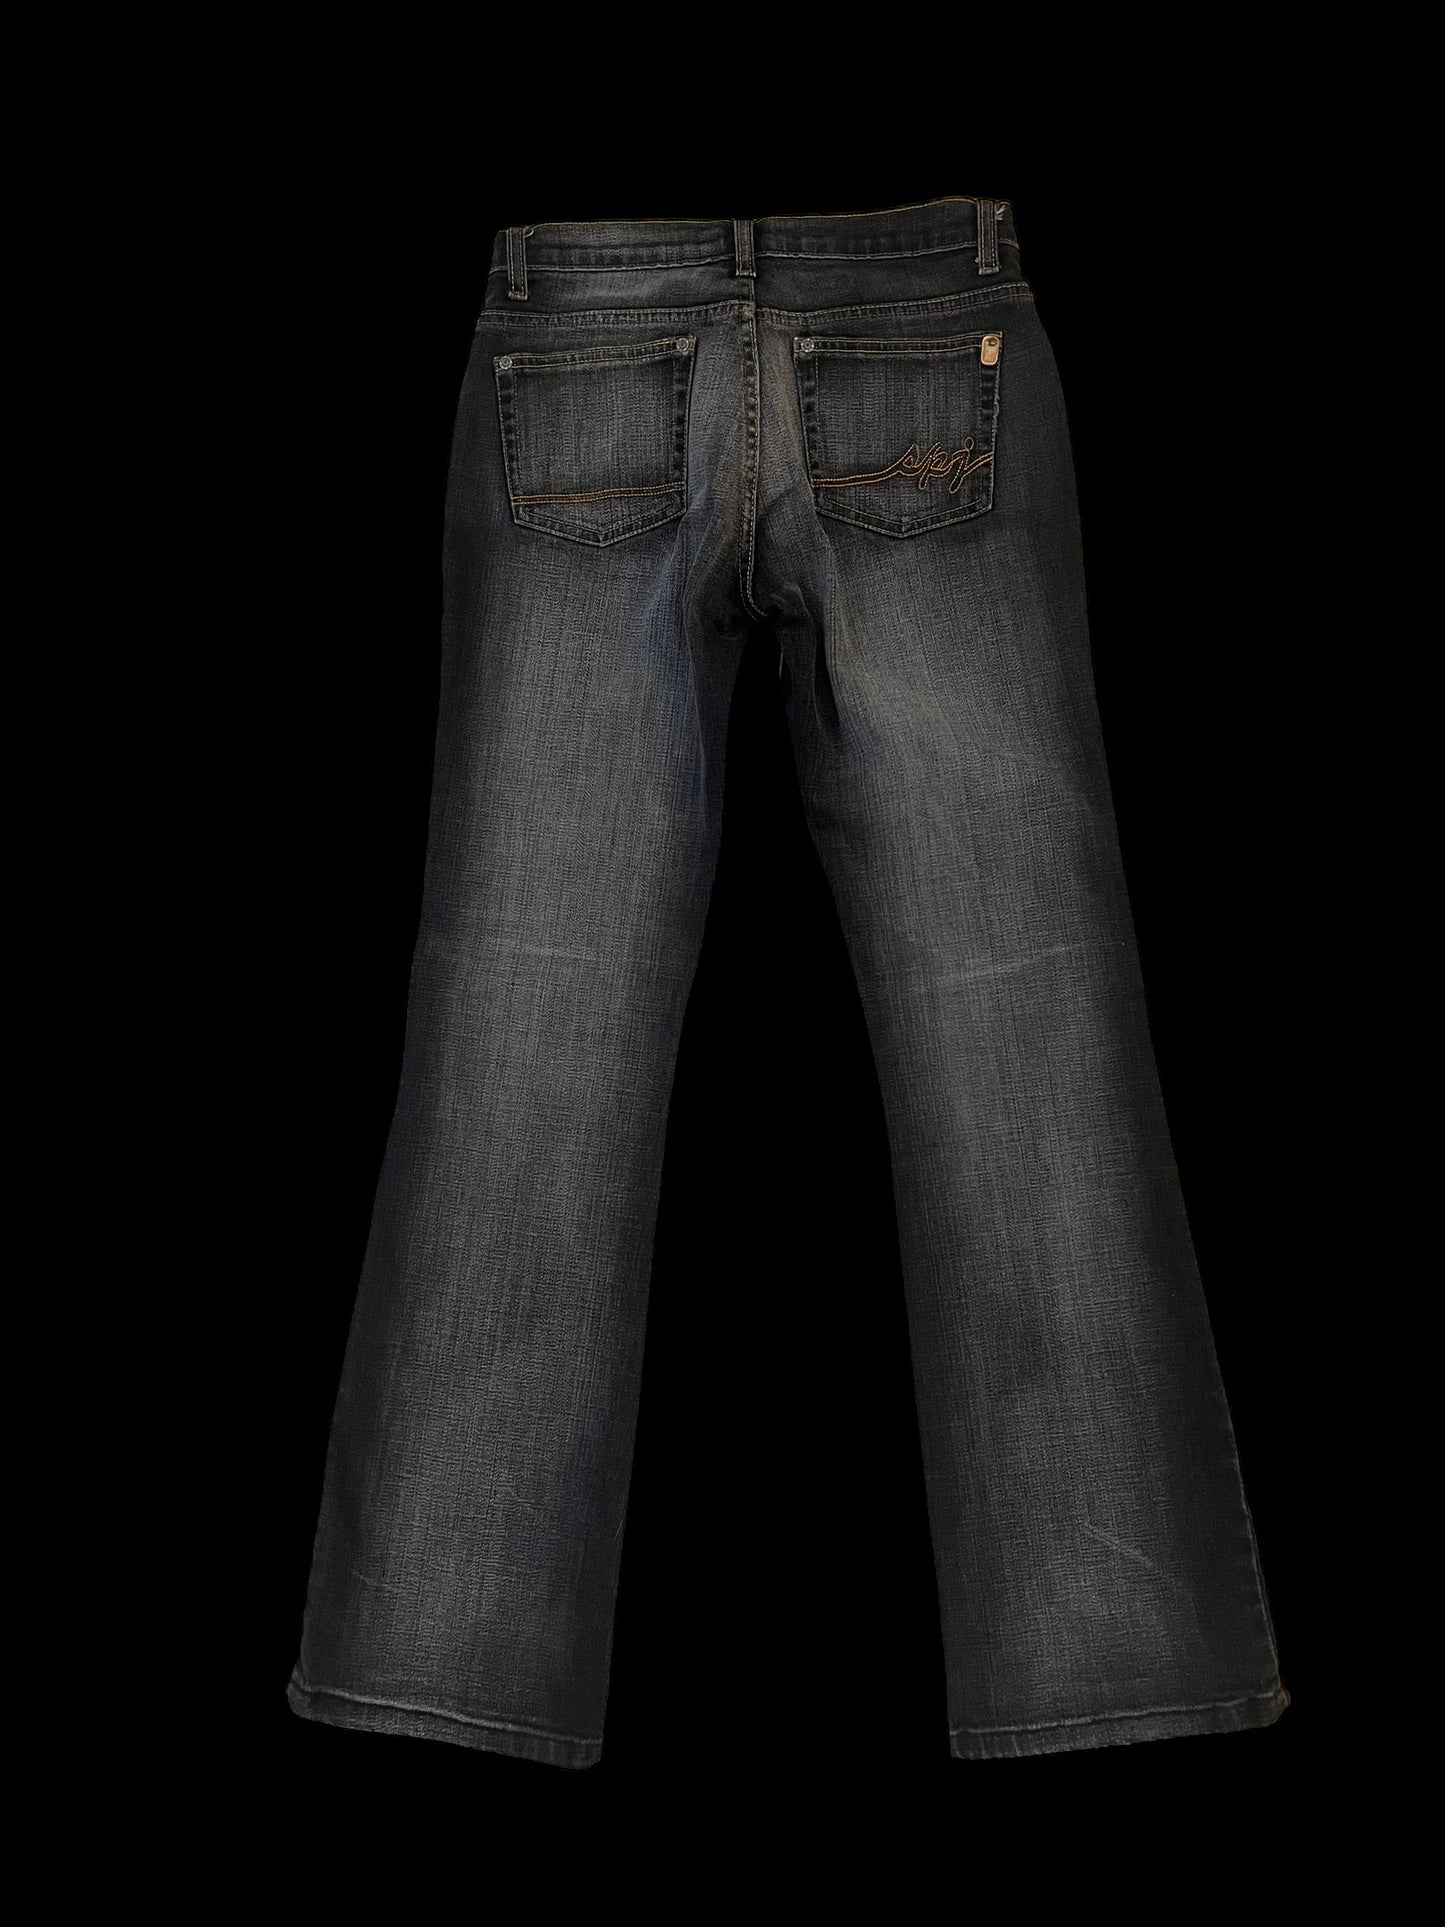 Grey gradient jeans